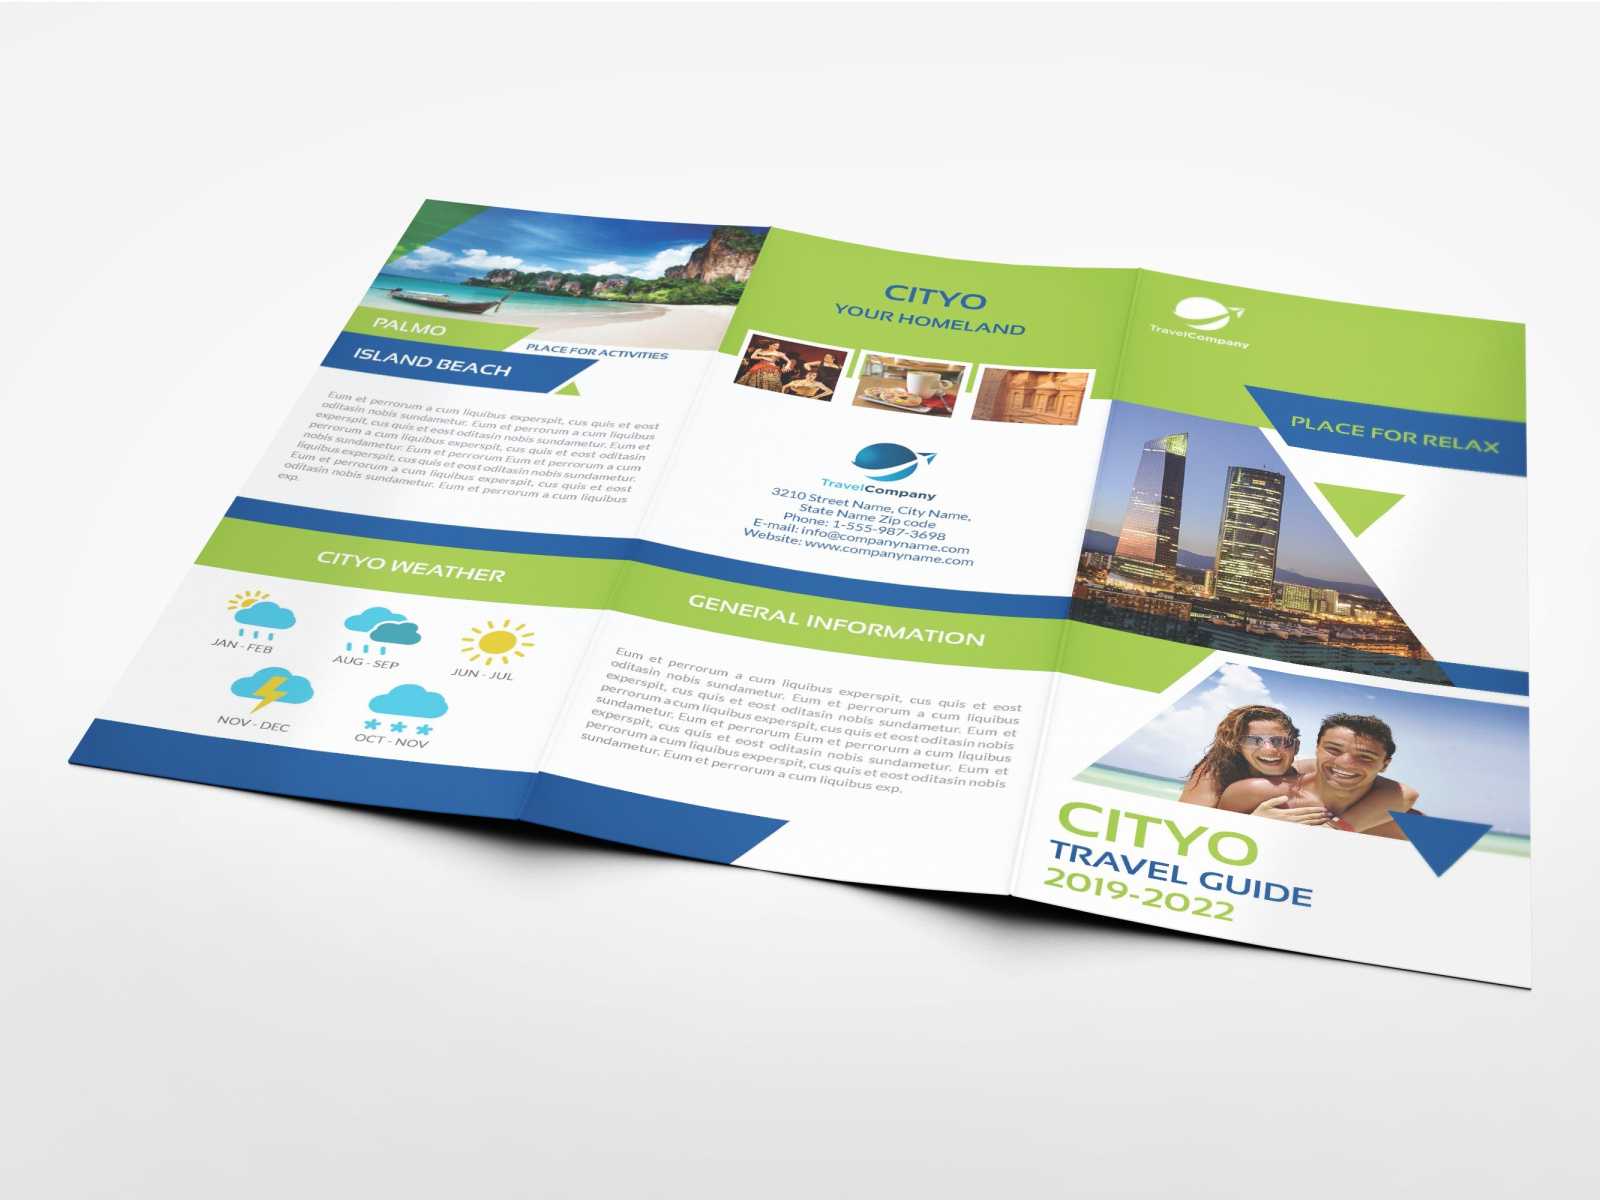 Travel Guide Tri Fold Brochure Templateowpictures On In Travel Guide Brochure Template